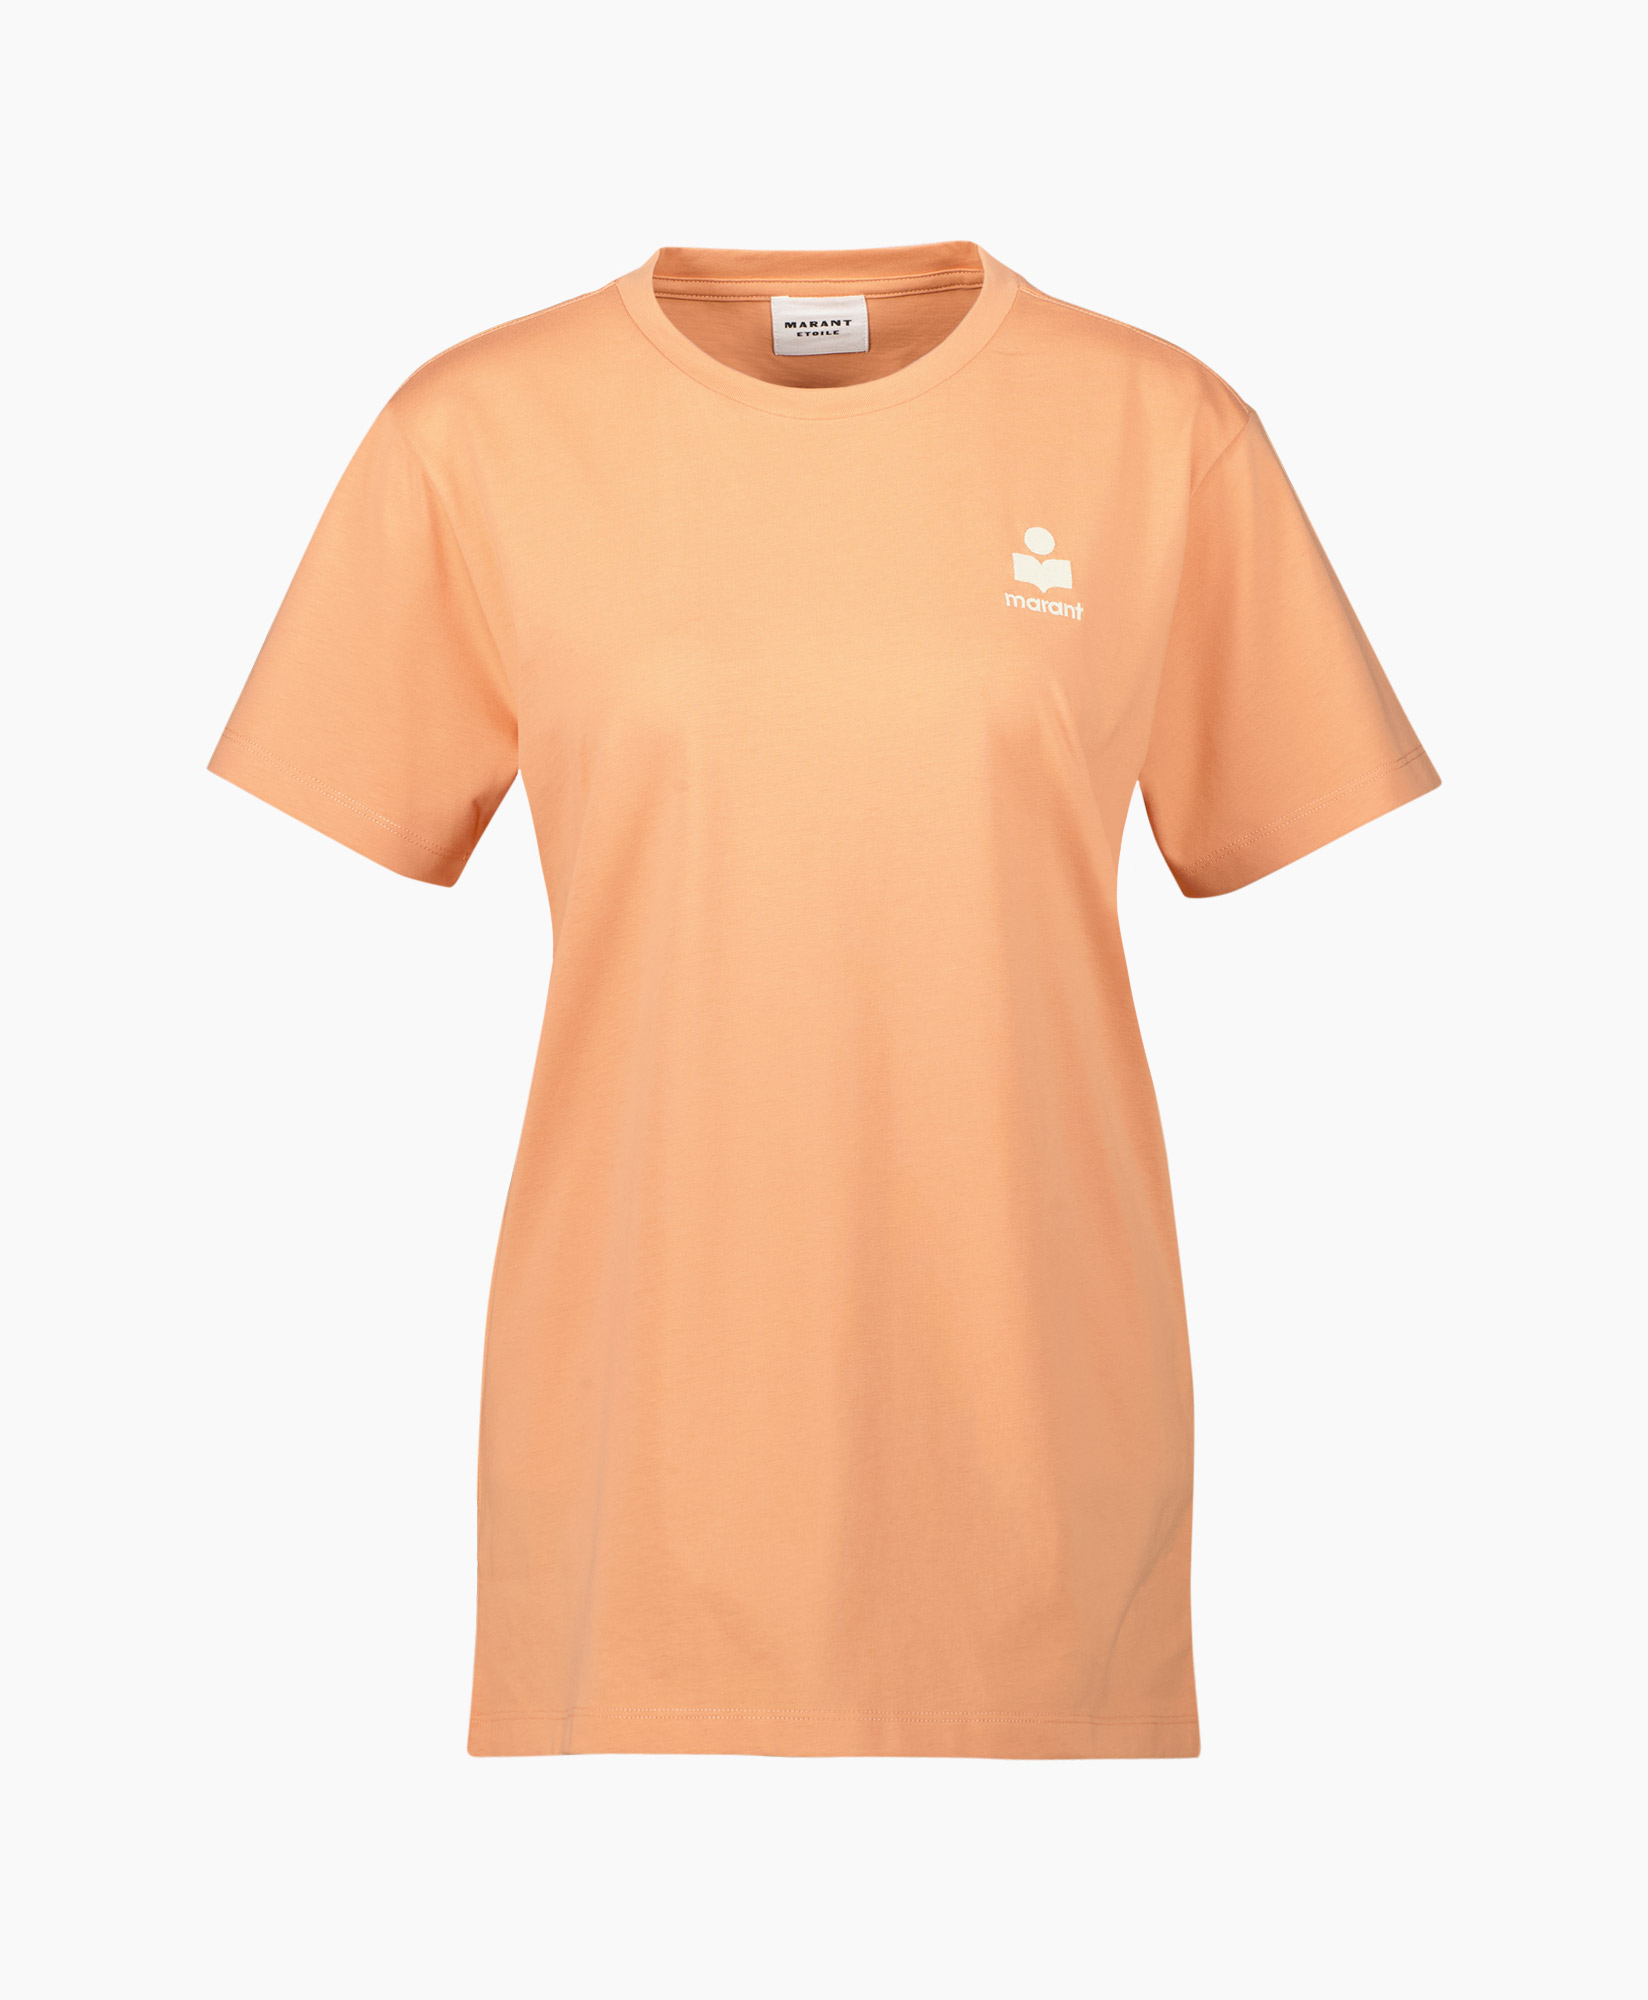 Marant Étoile T-shirt Korte Mouw Aby Oranje